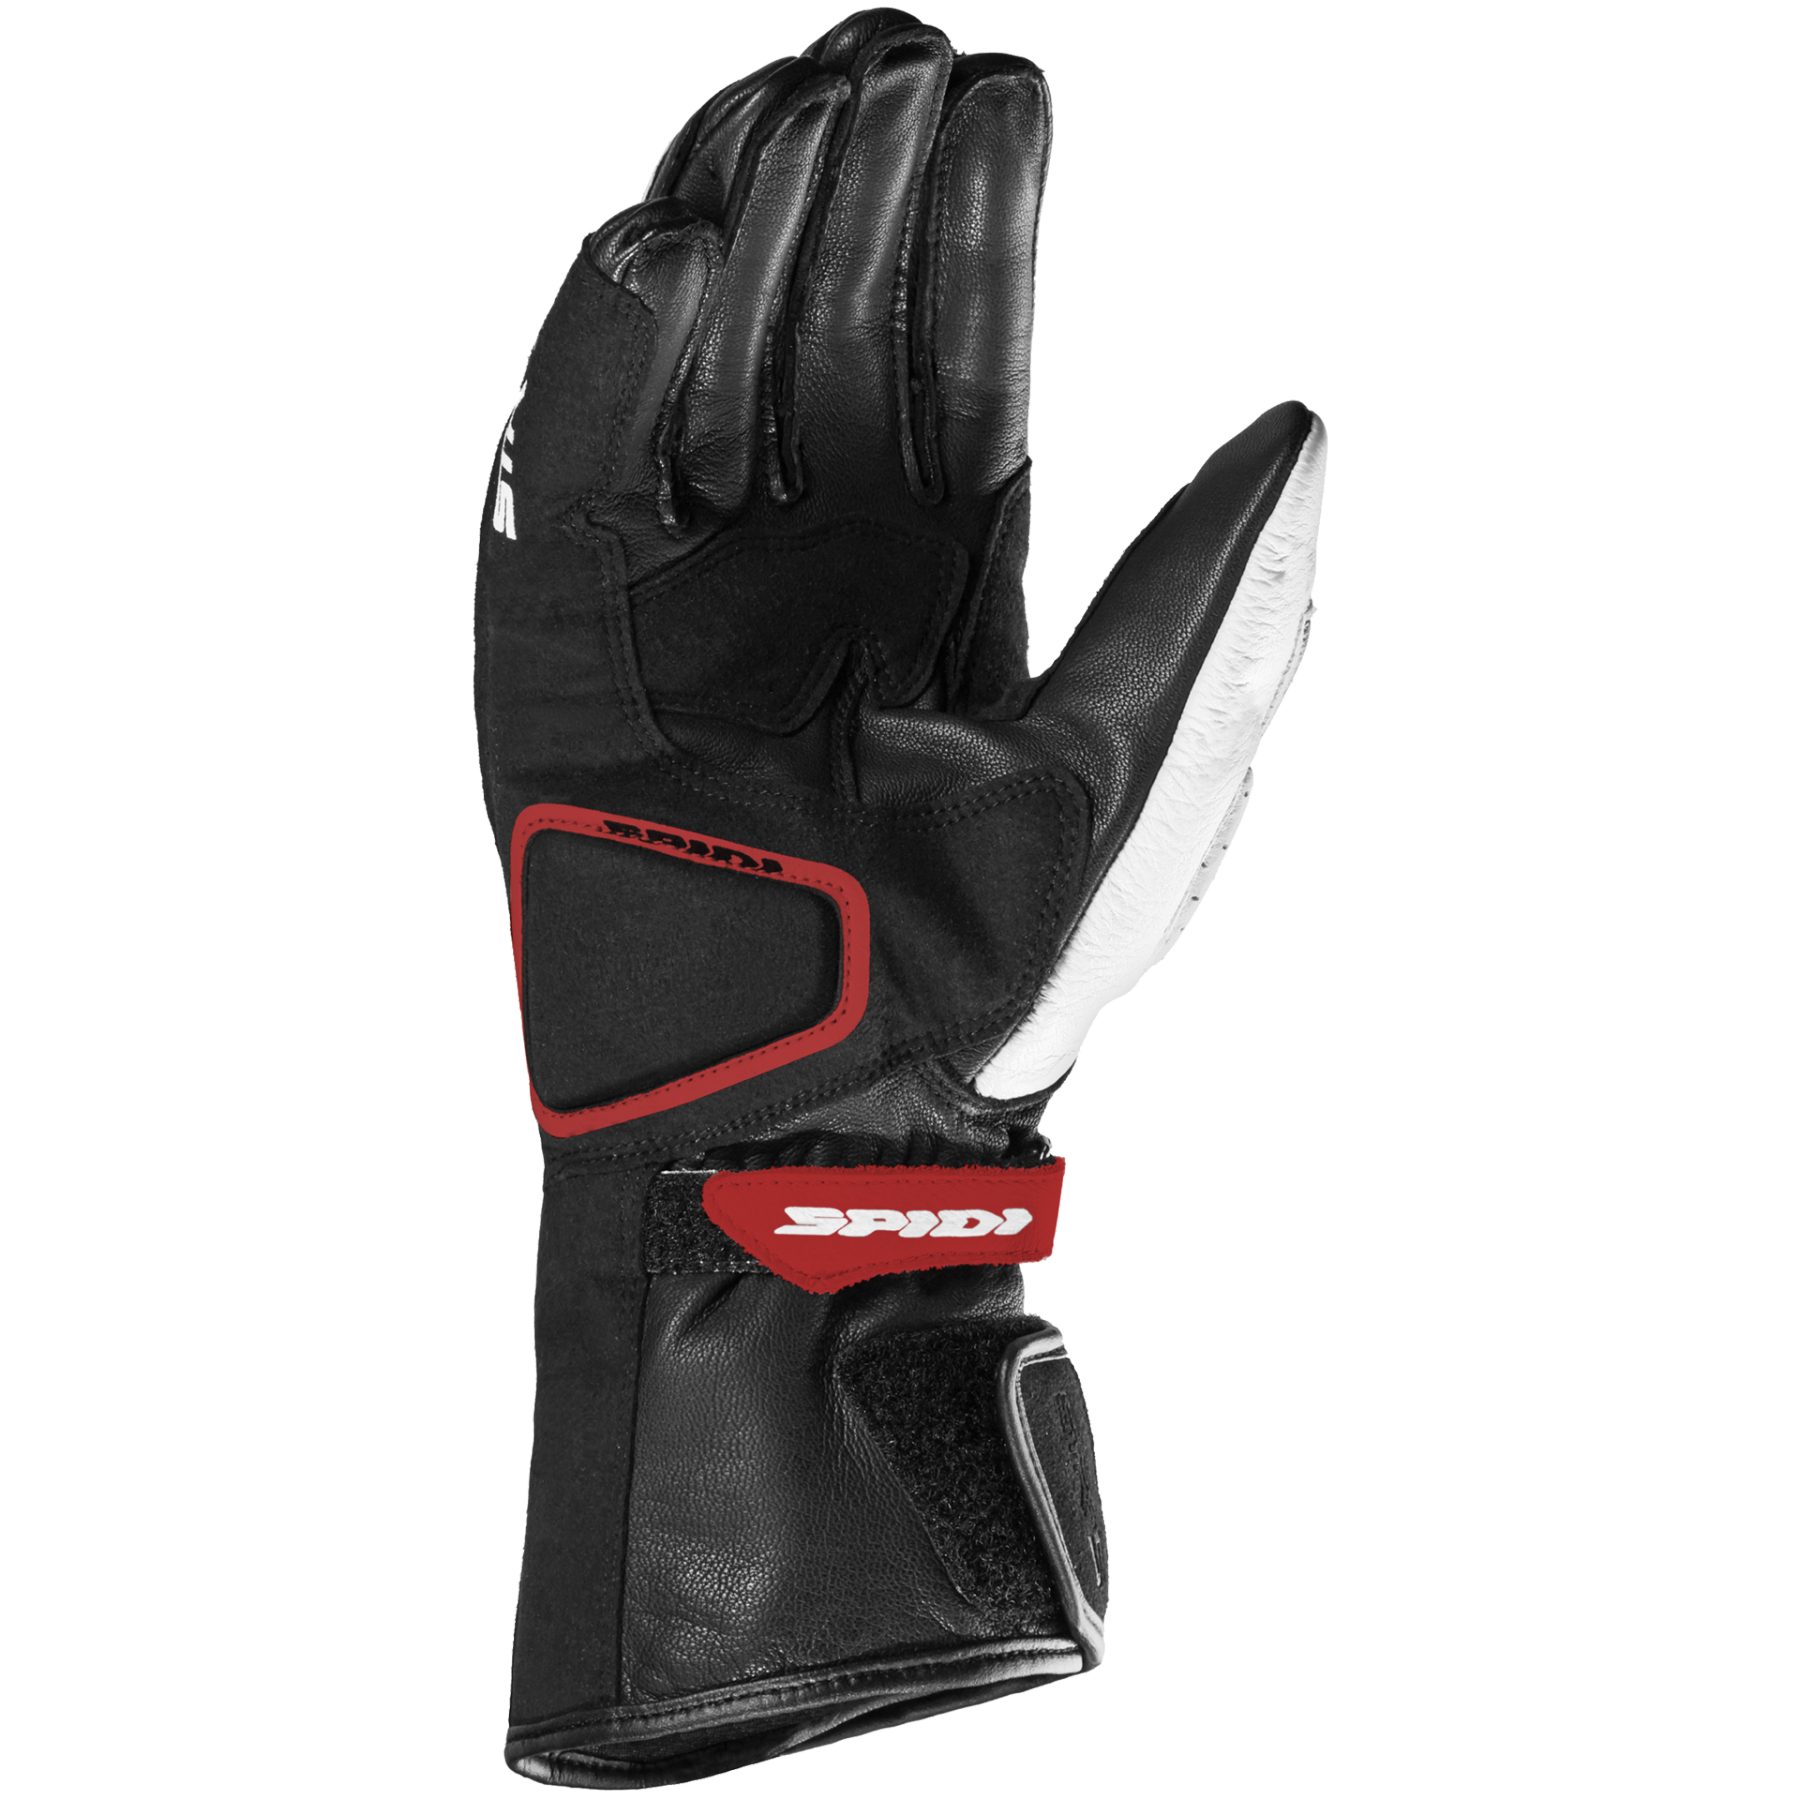 Guanti Gloves Gants Guantes in pelle STR-5 SPIDI Nero Giallo UOMO moto A175-394 